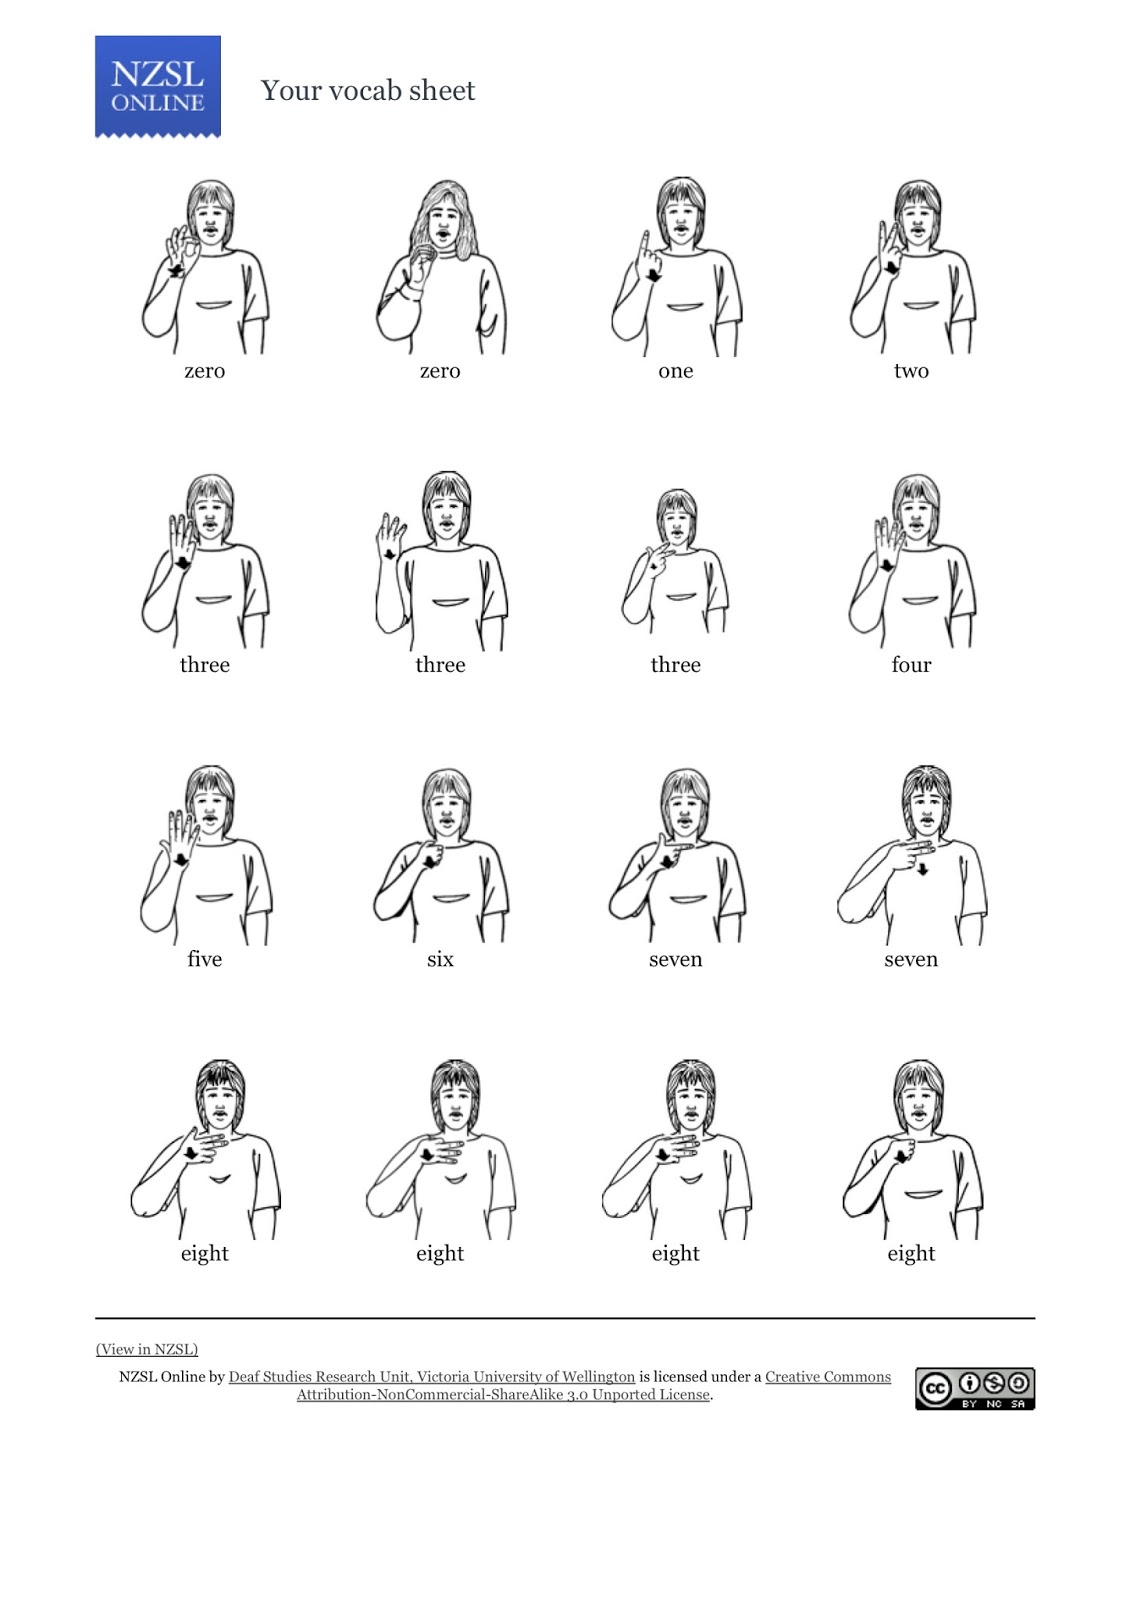 Sign Language Dictionary Clip Art